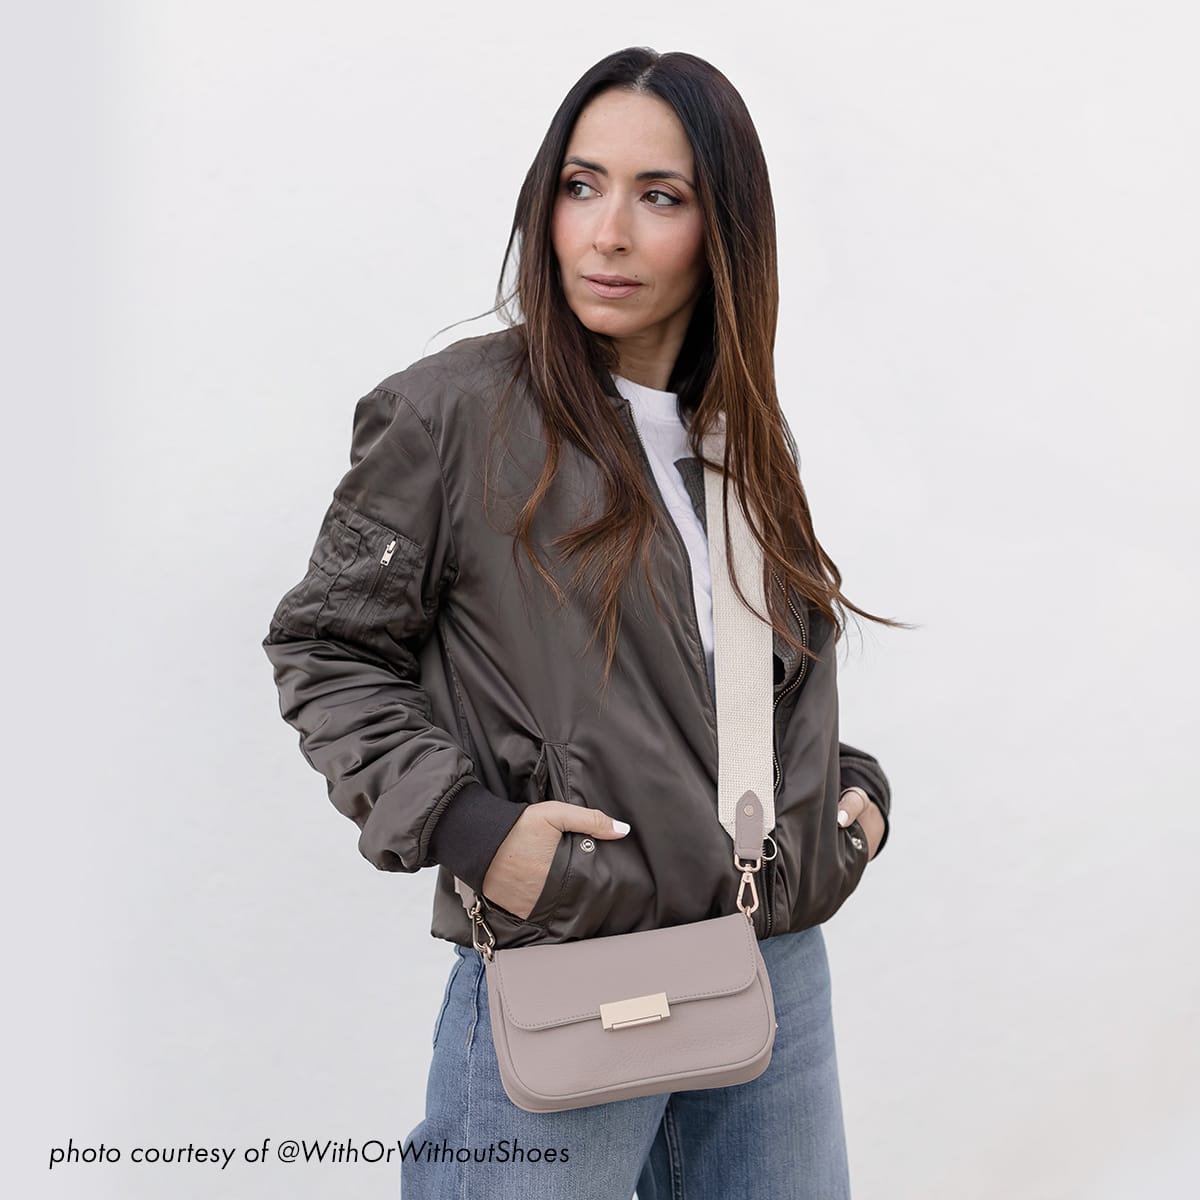 Fusiones Women's Handmade Patent Calf Leather Shoulder or Crossbody Handbag